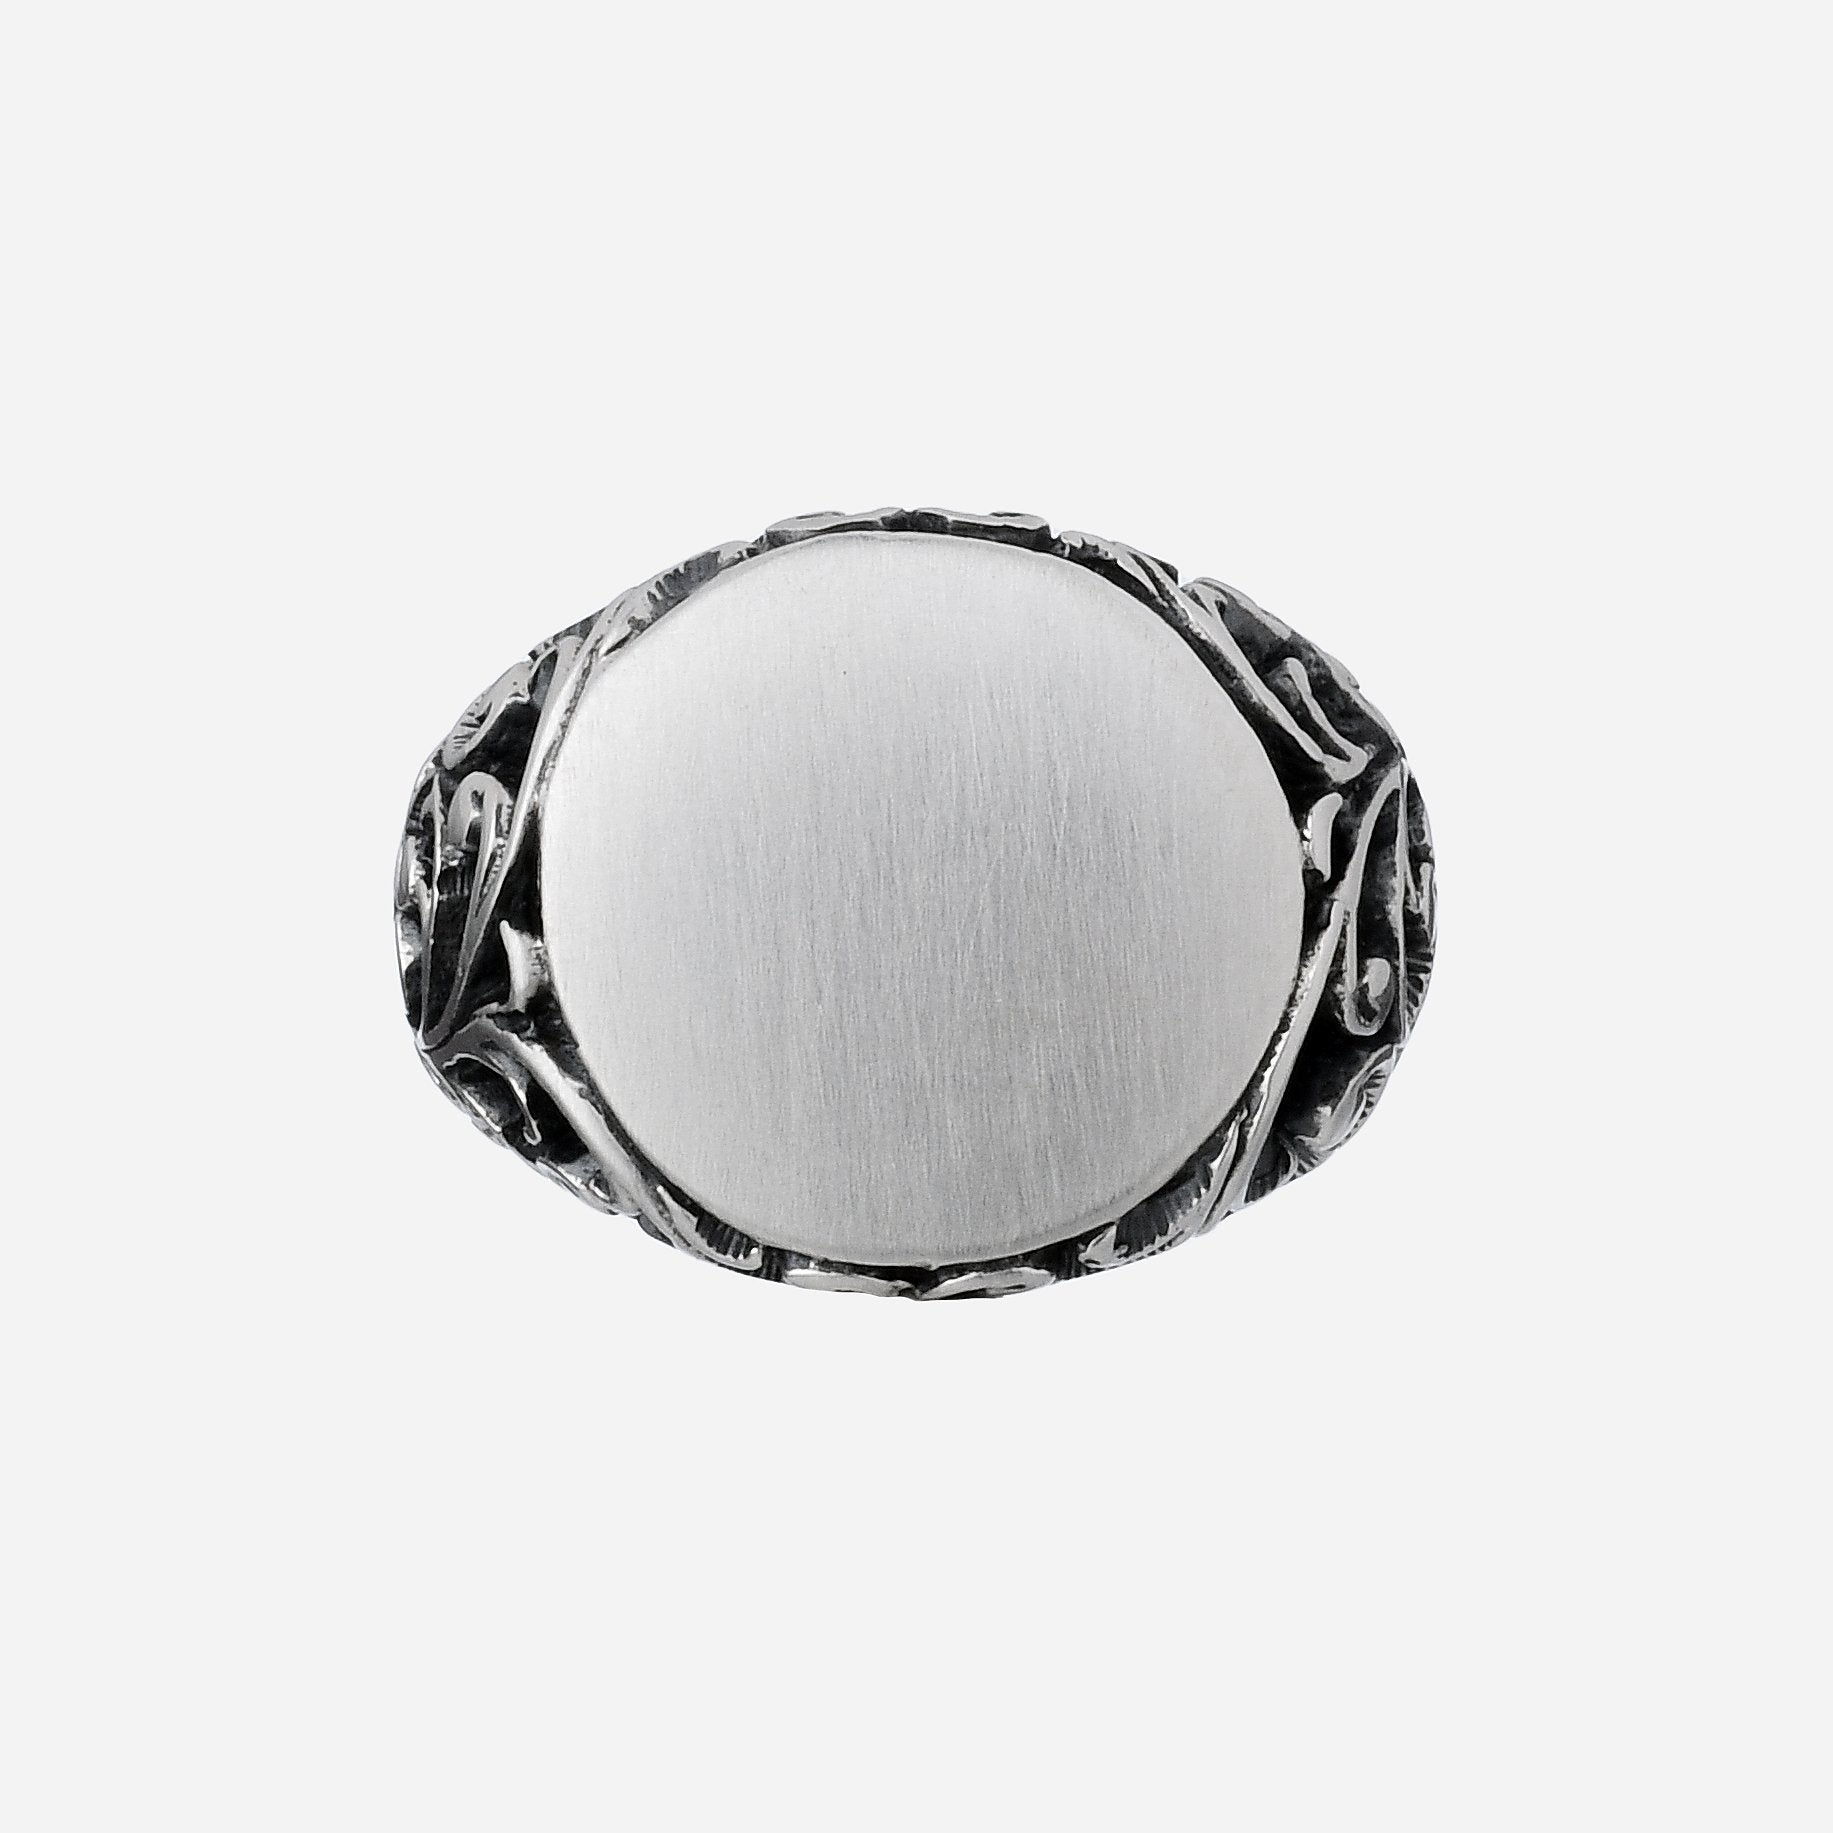 Chevalier ring, satin plate